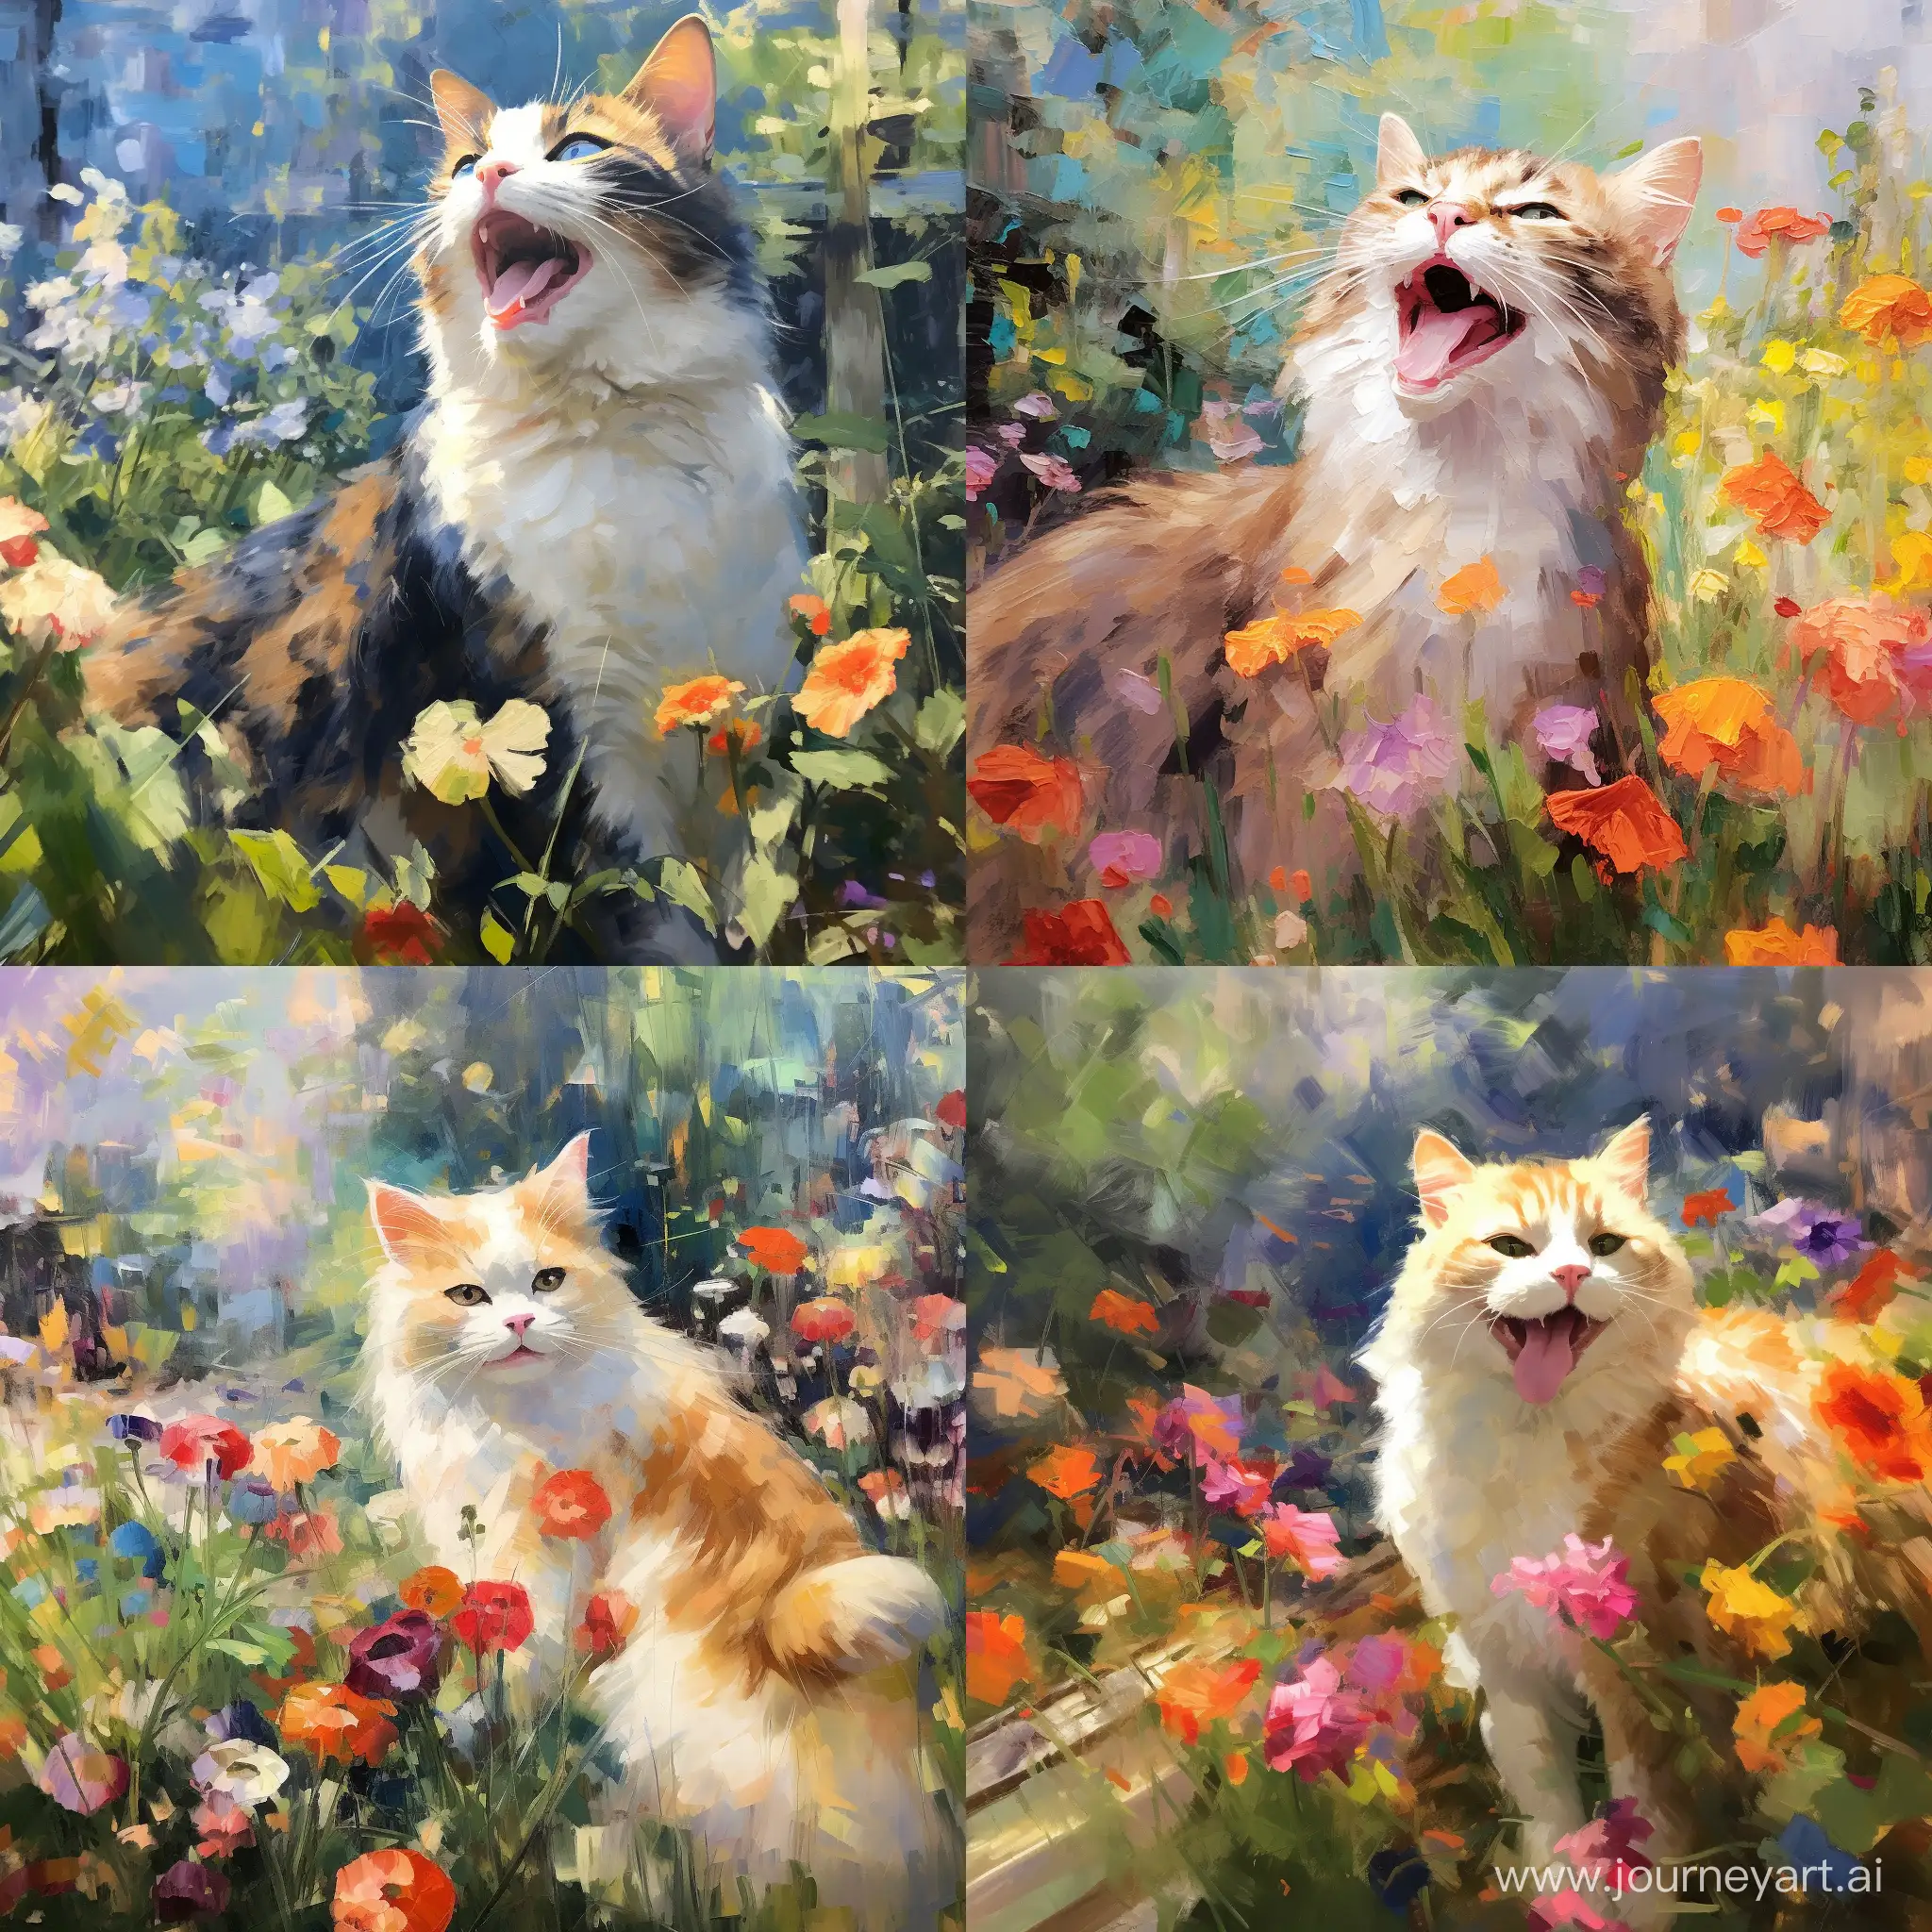 Joyful-Cat-Enjoying-a-Garden-Oasis-in-Impressionist-Style